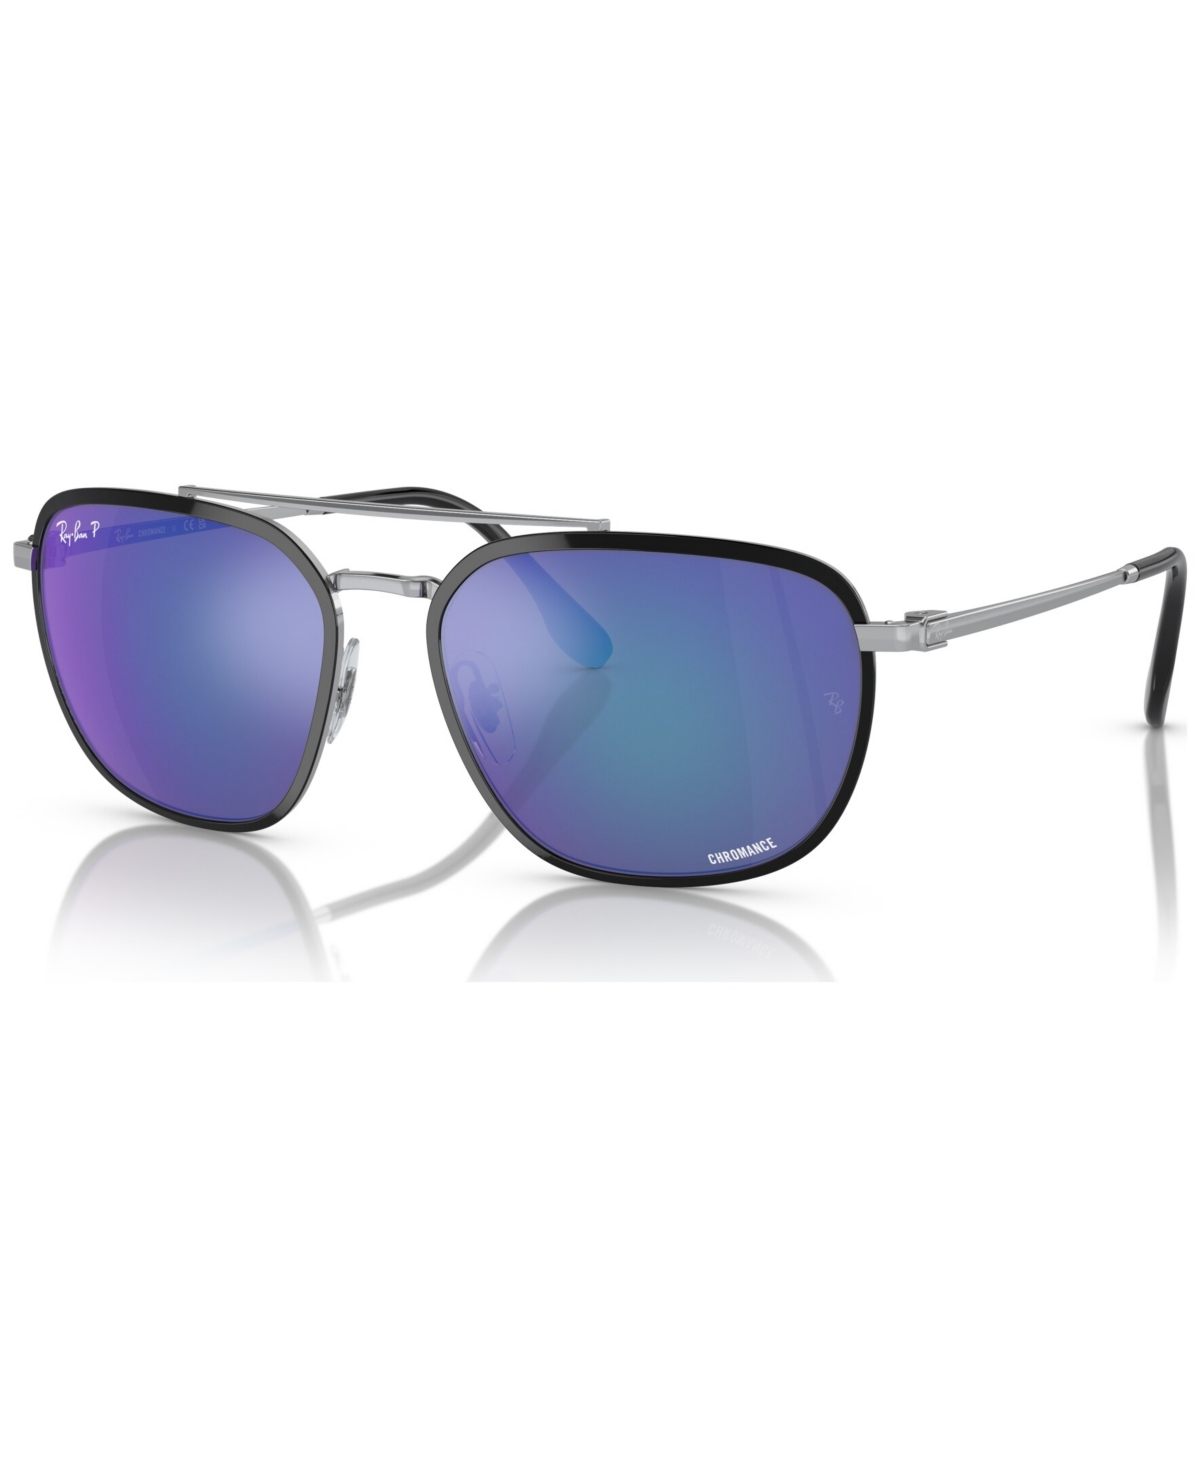 Ray Ban Rb3708 Chromance Sunglasses Silver Frame Blue Lenses Polarized 56-18